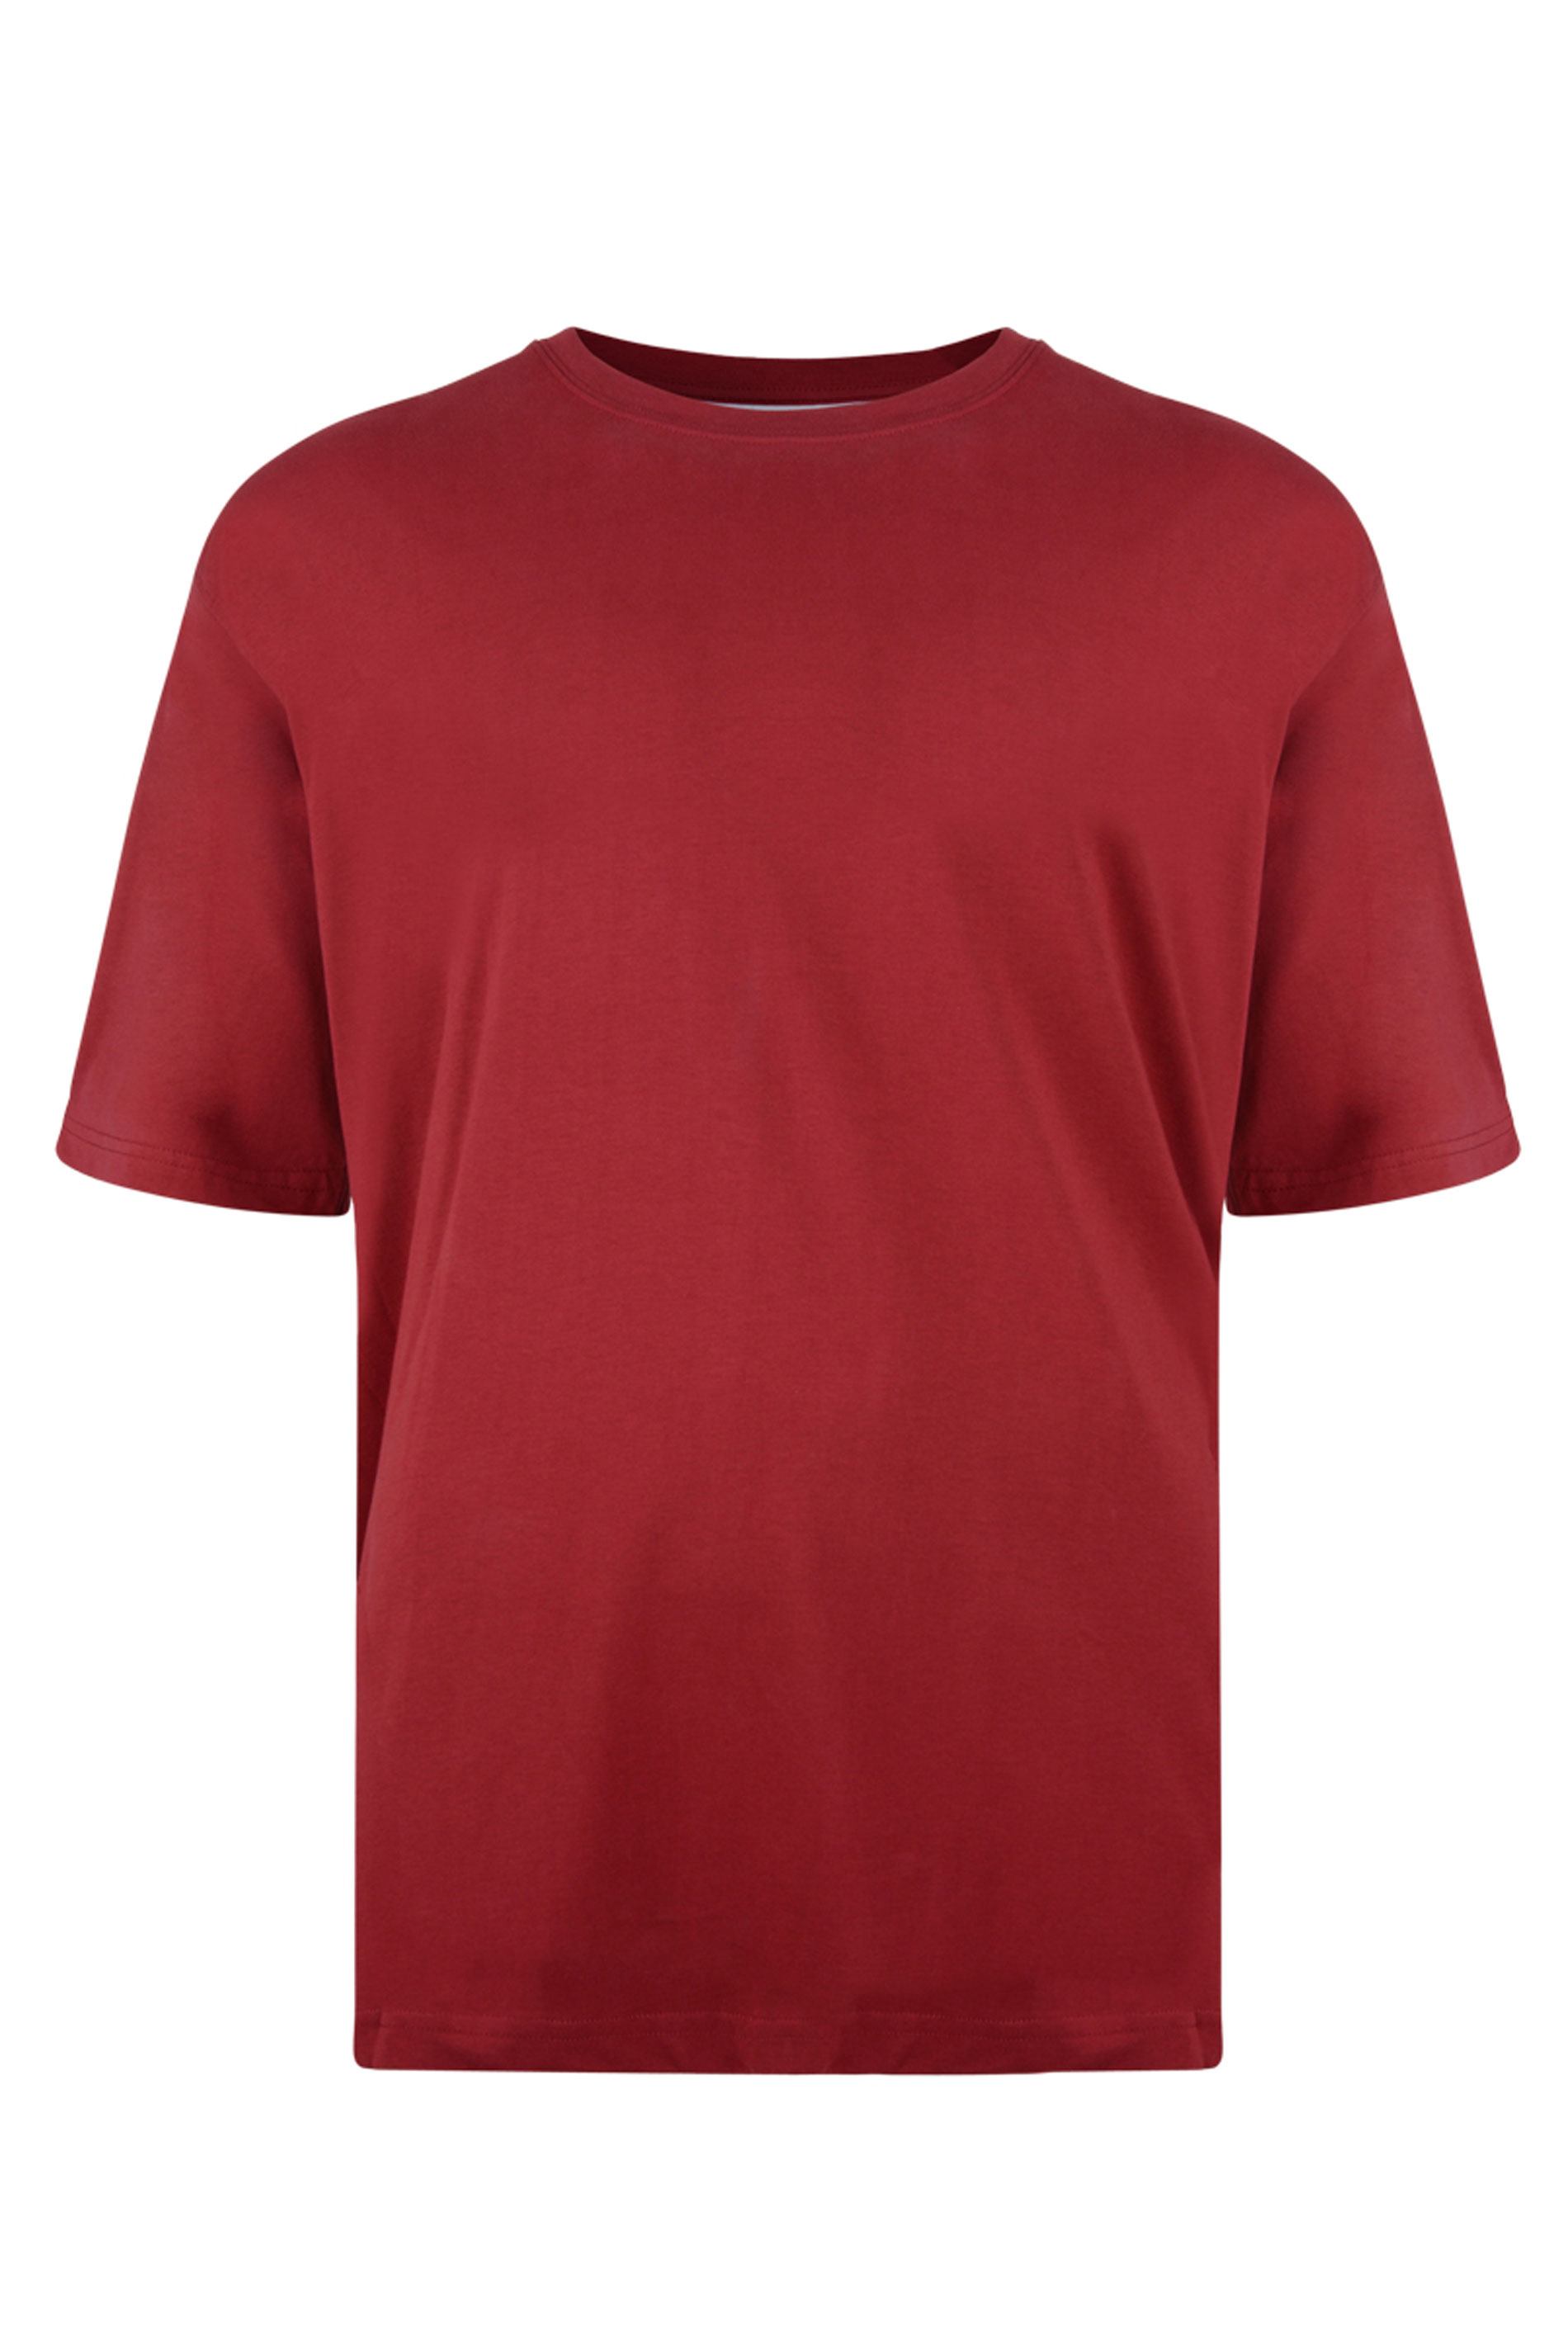 KAM Big & Tall Red Plain T-Shirt | BadRhino 2